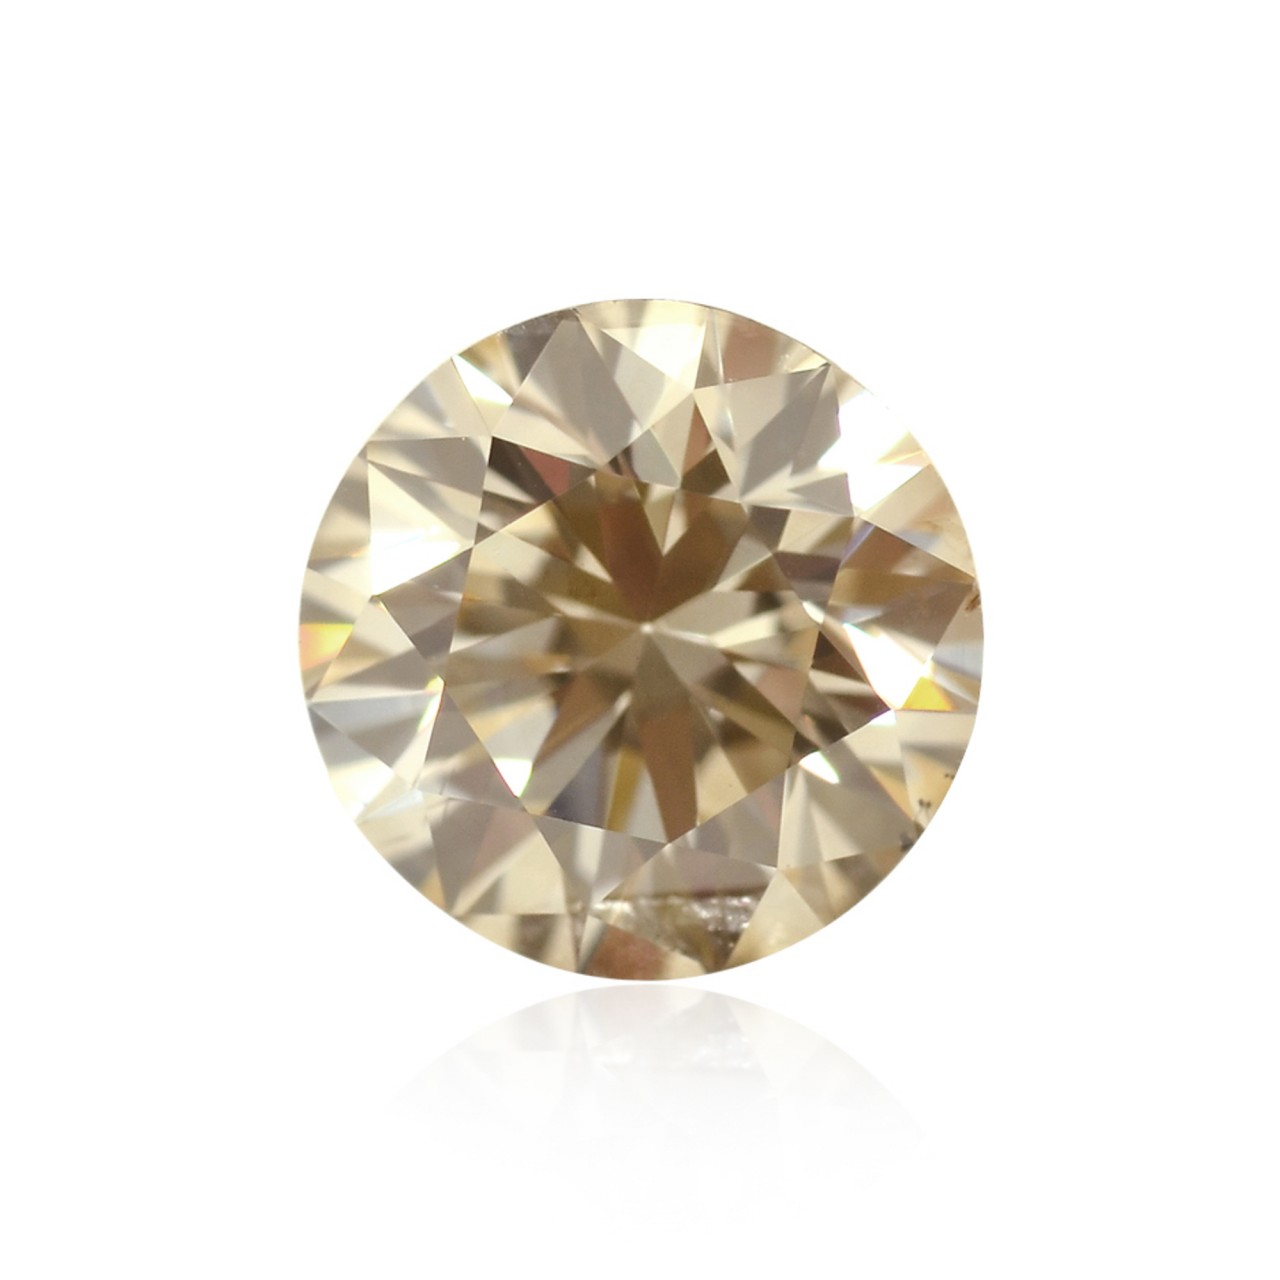 0.34 carat, Fancy Light Brown Diamond, Round Shape, SI1 Clarity